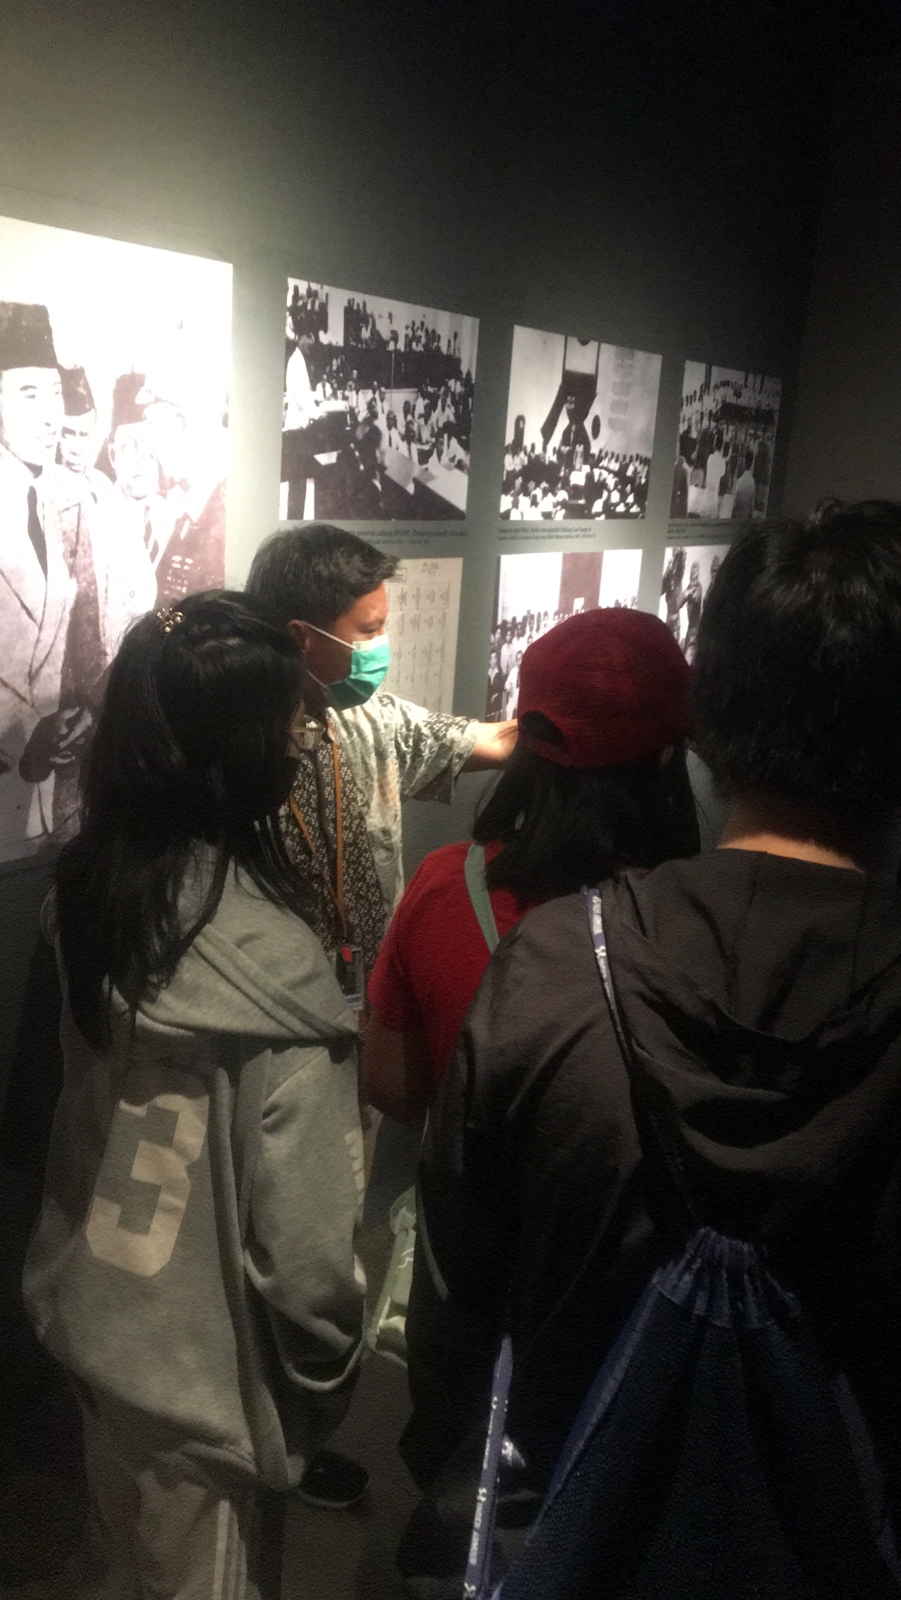 Belajar sejarah Presiden Sukarno, SMA Tri Ratna Kunjungi PSAS Kepresidenan